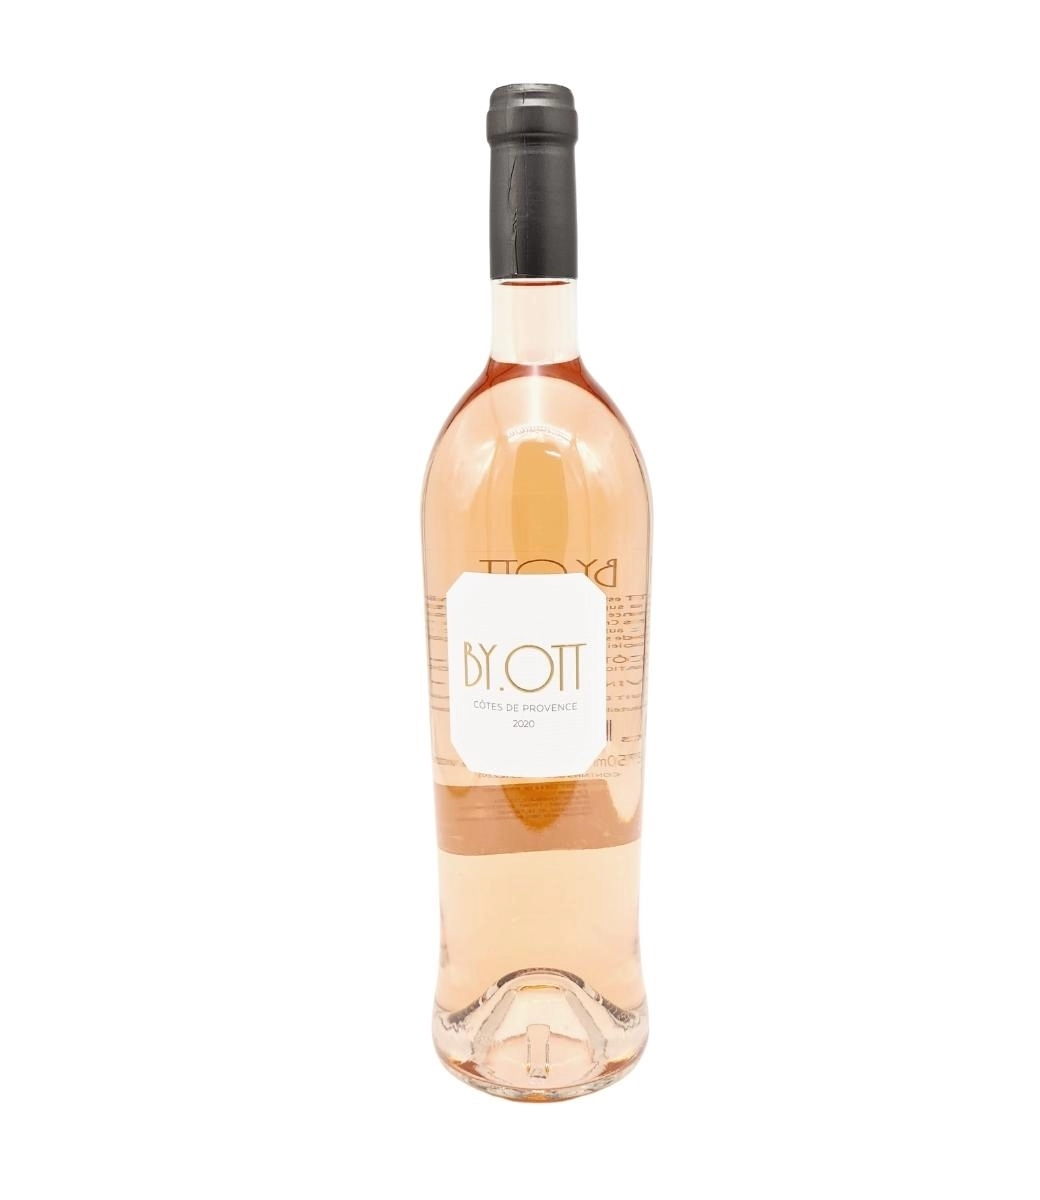 Vin rose BY OTT Provence 2020 0.75L